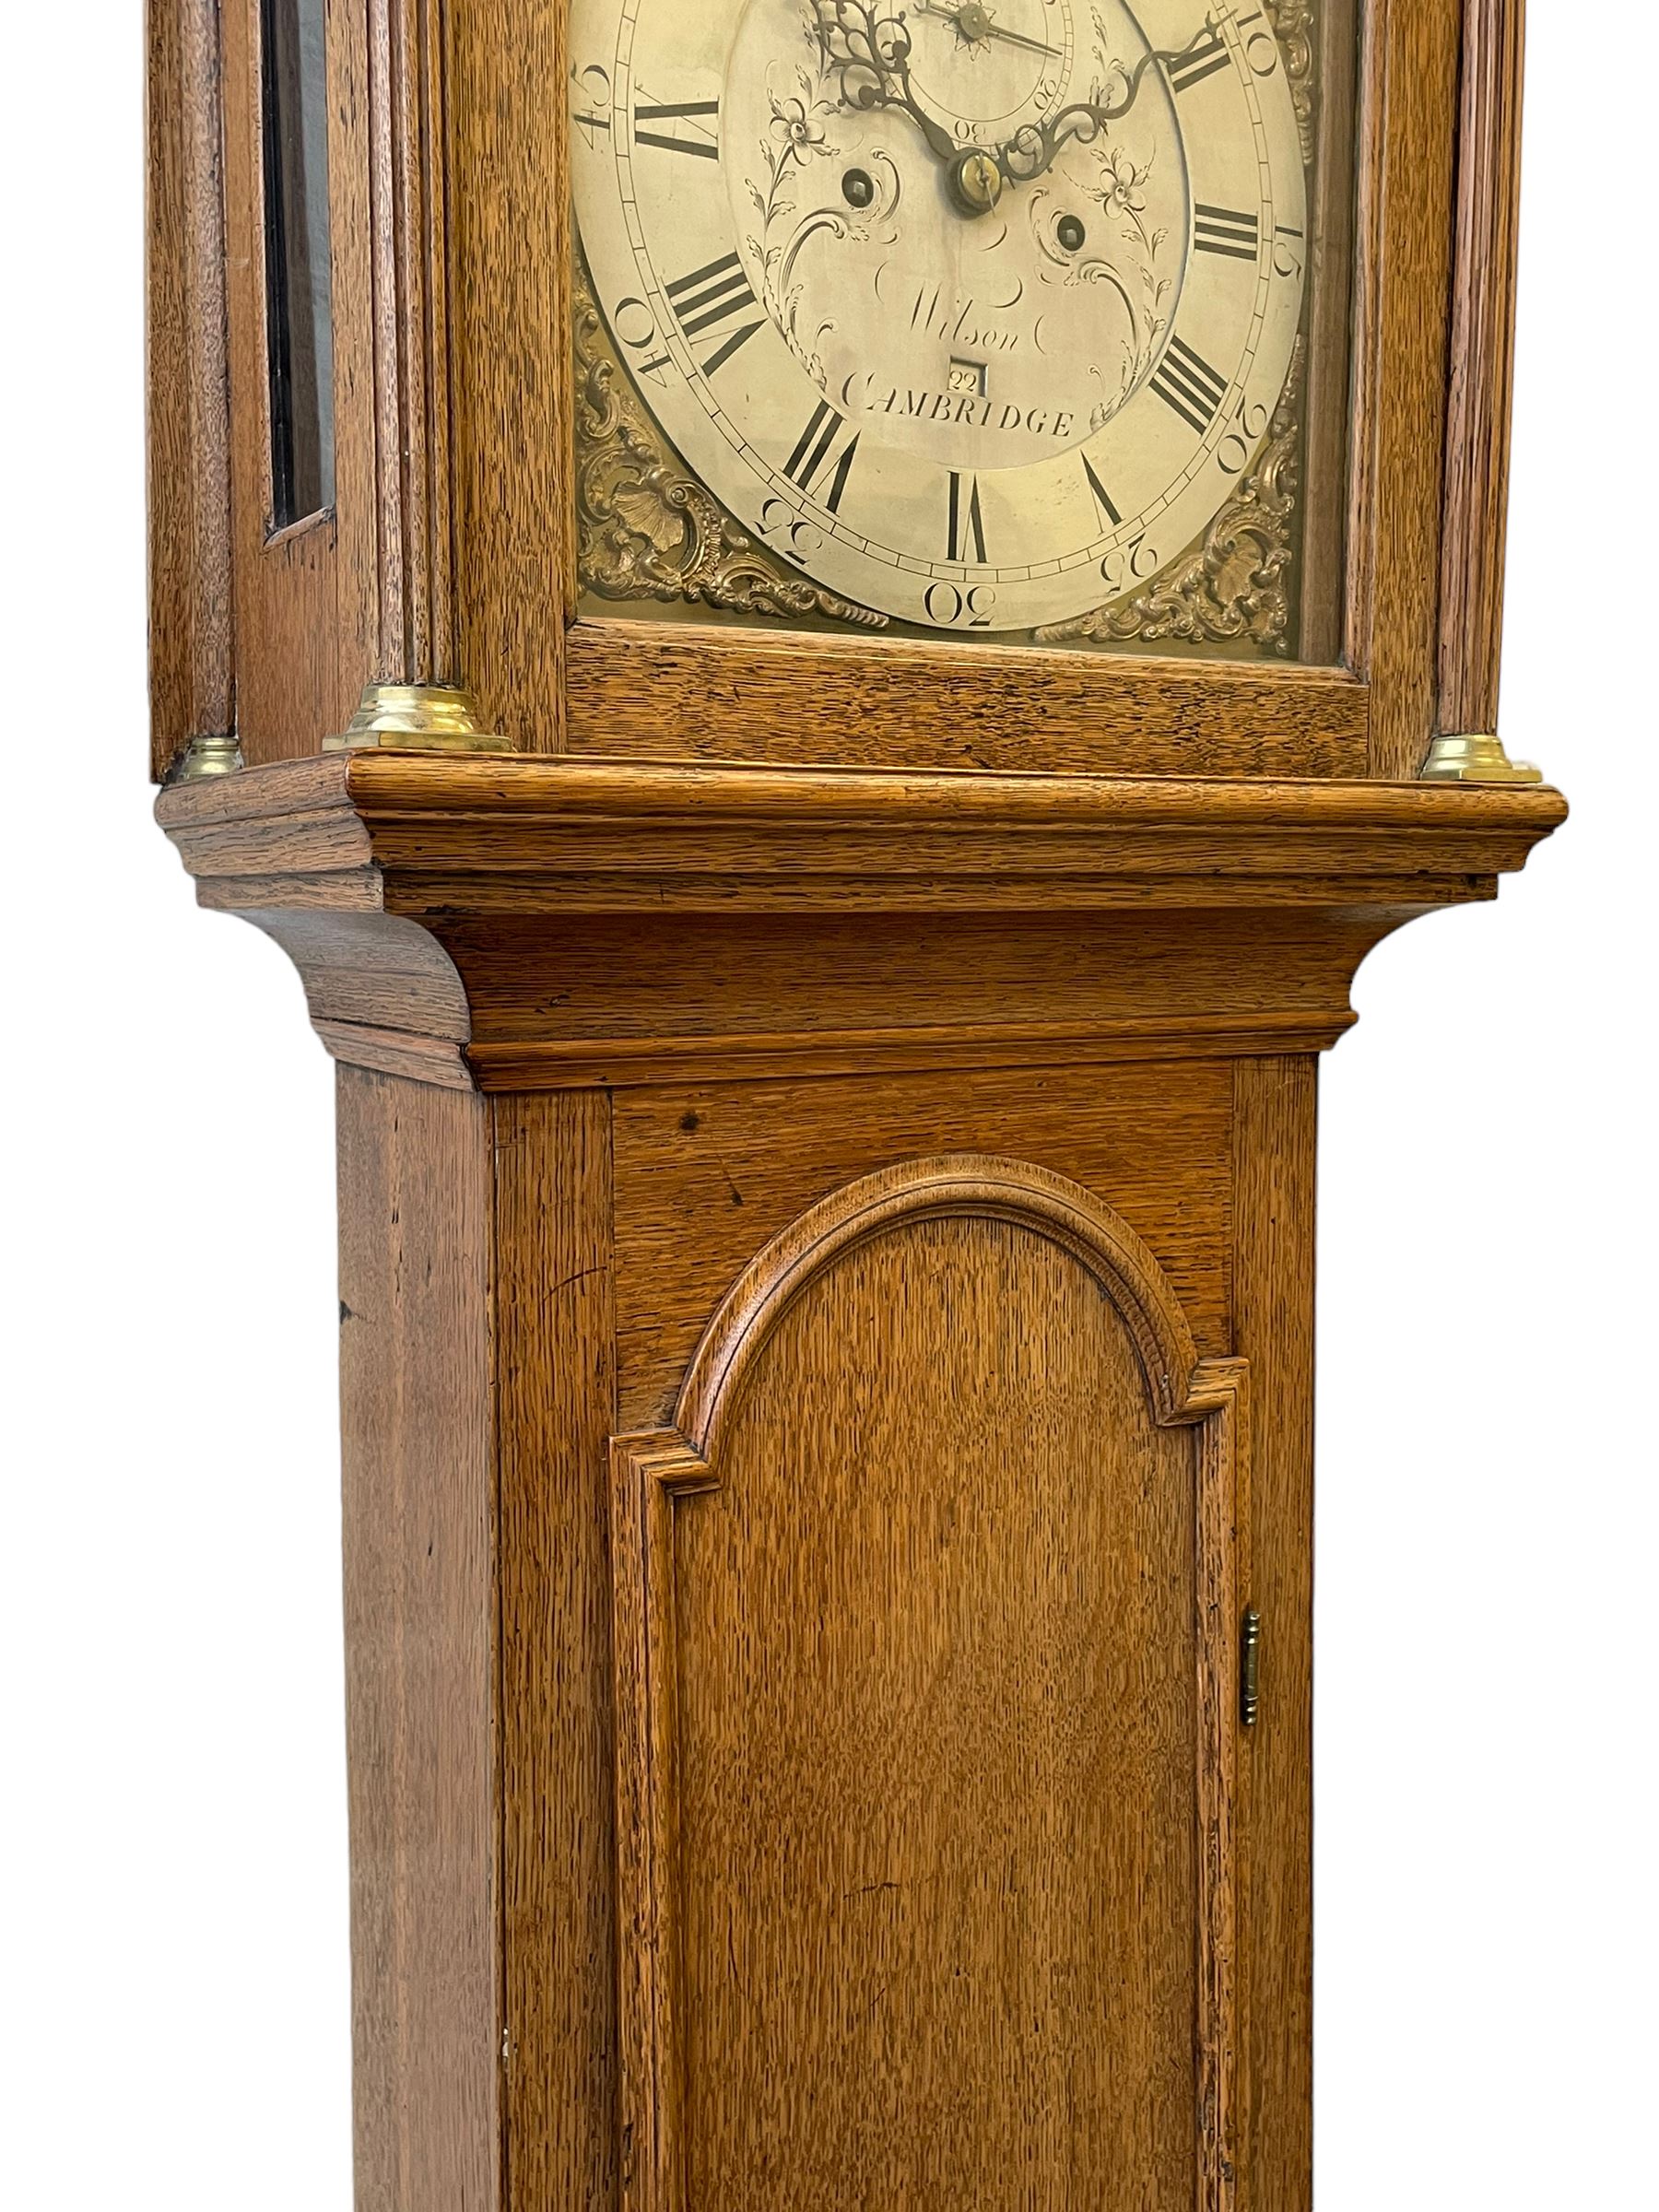 William Wilson of Cambridge - George III oak cased 8-day longcase clock - Image 2 of 15